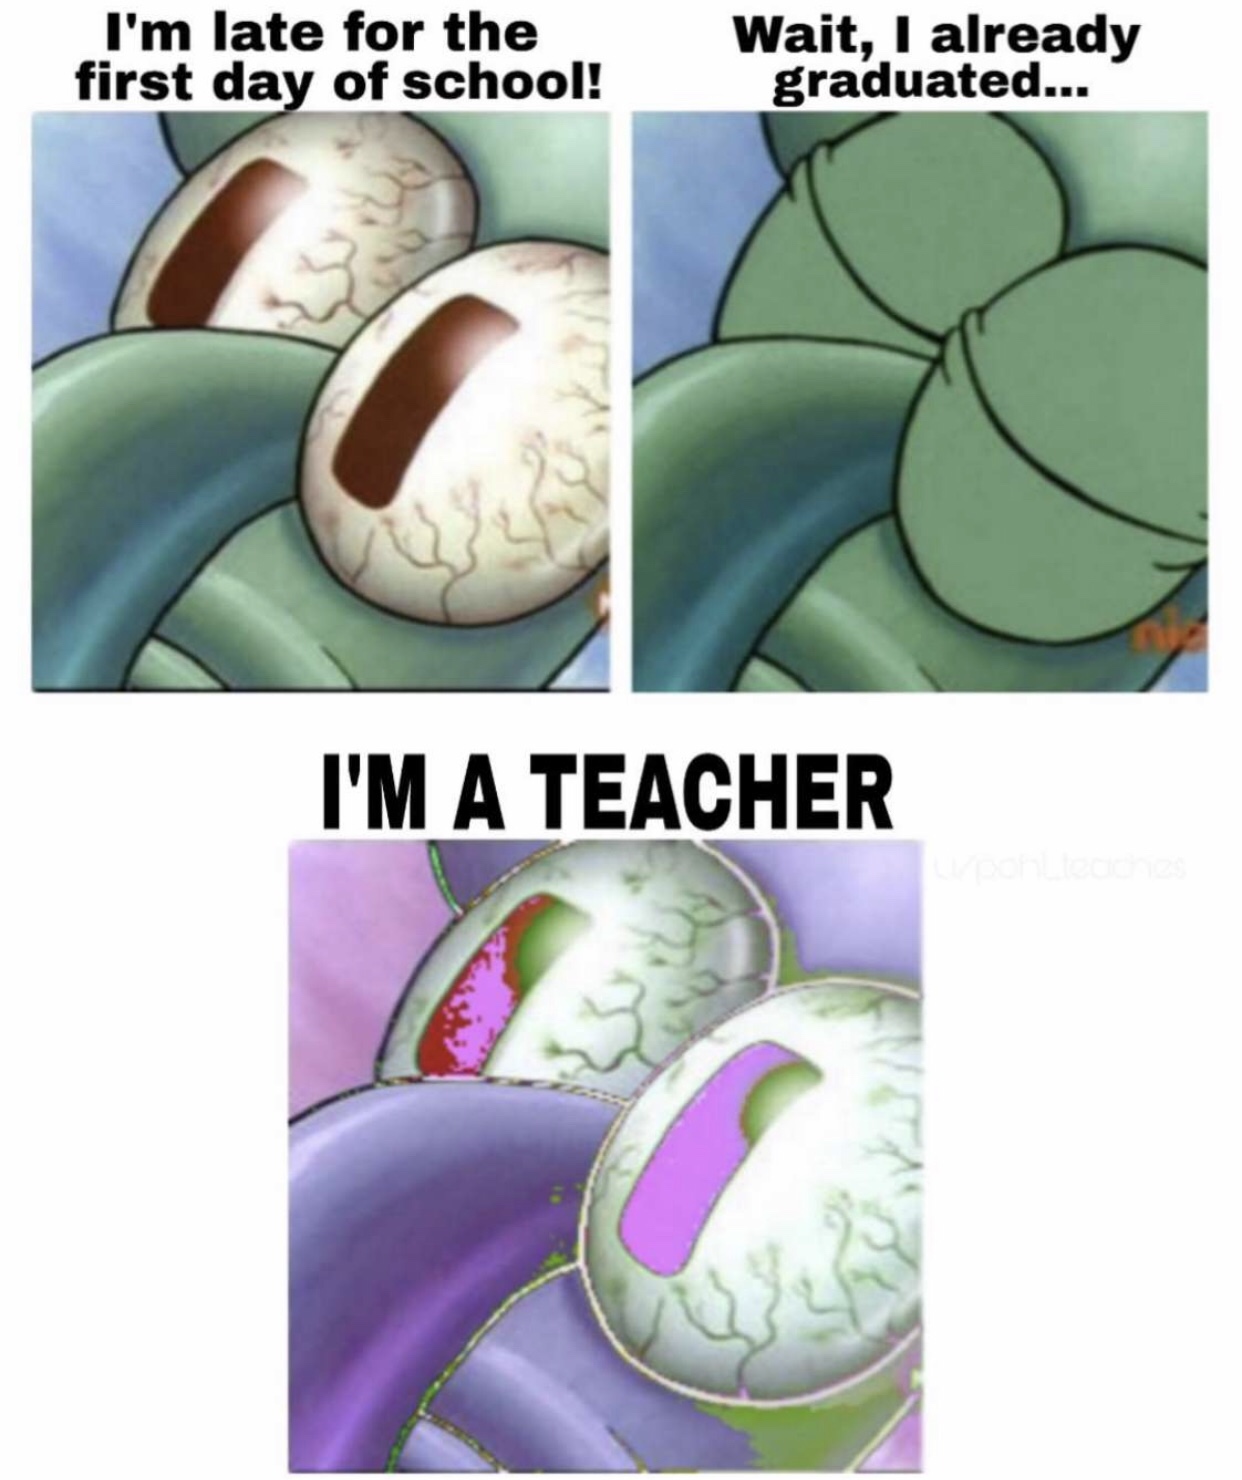 squidward sleep meme - I'm late for the first day of school! Wait, I already graduated... I'M A Teacher